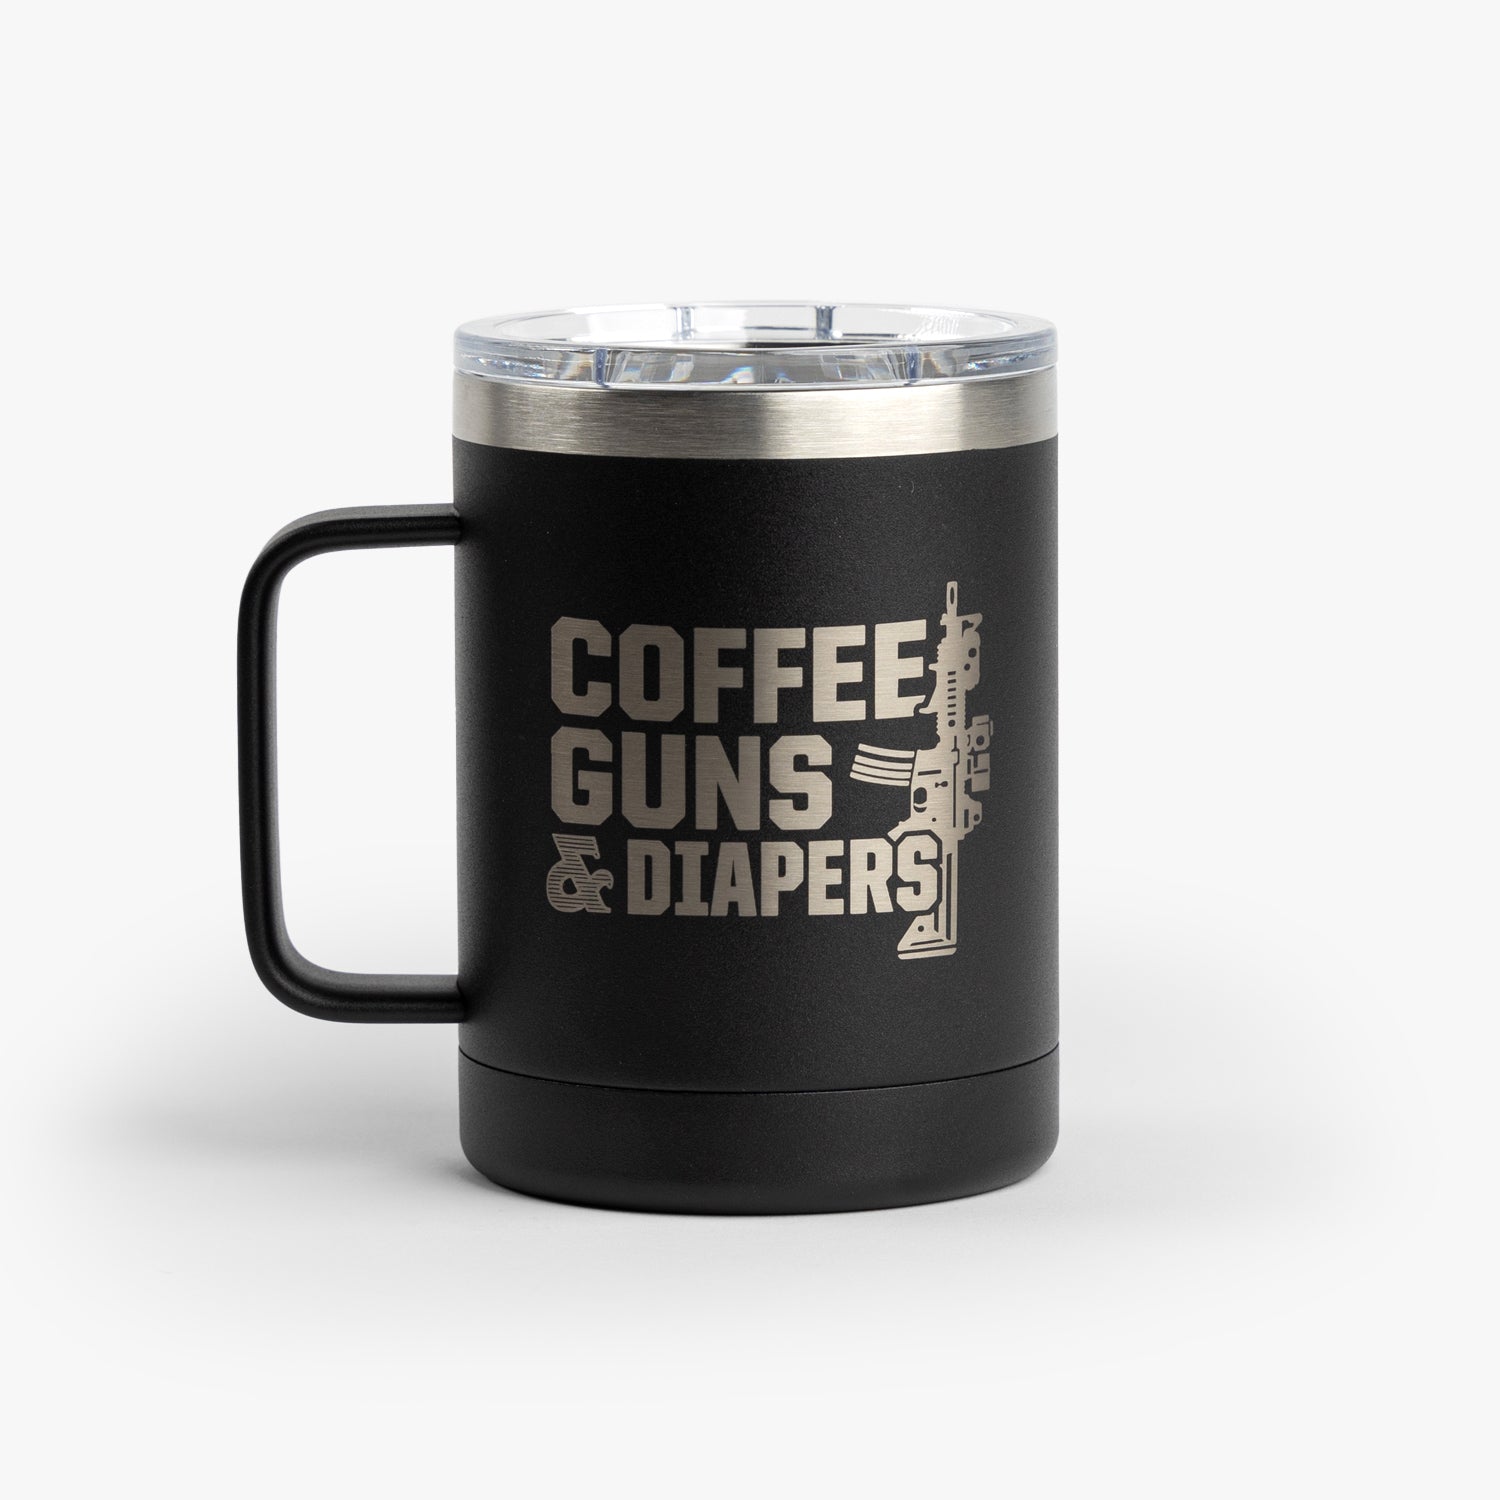 Coffee, Guns, and Diapers Mug - Black